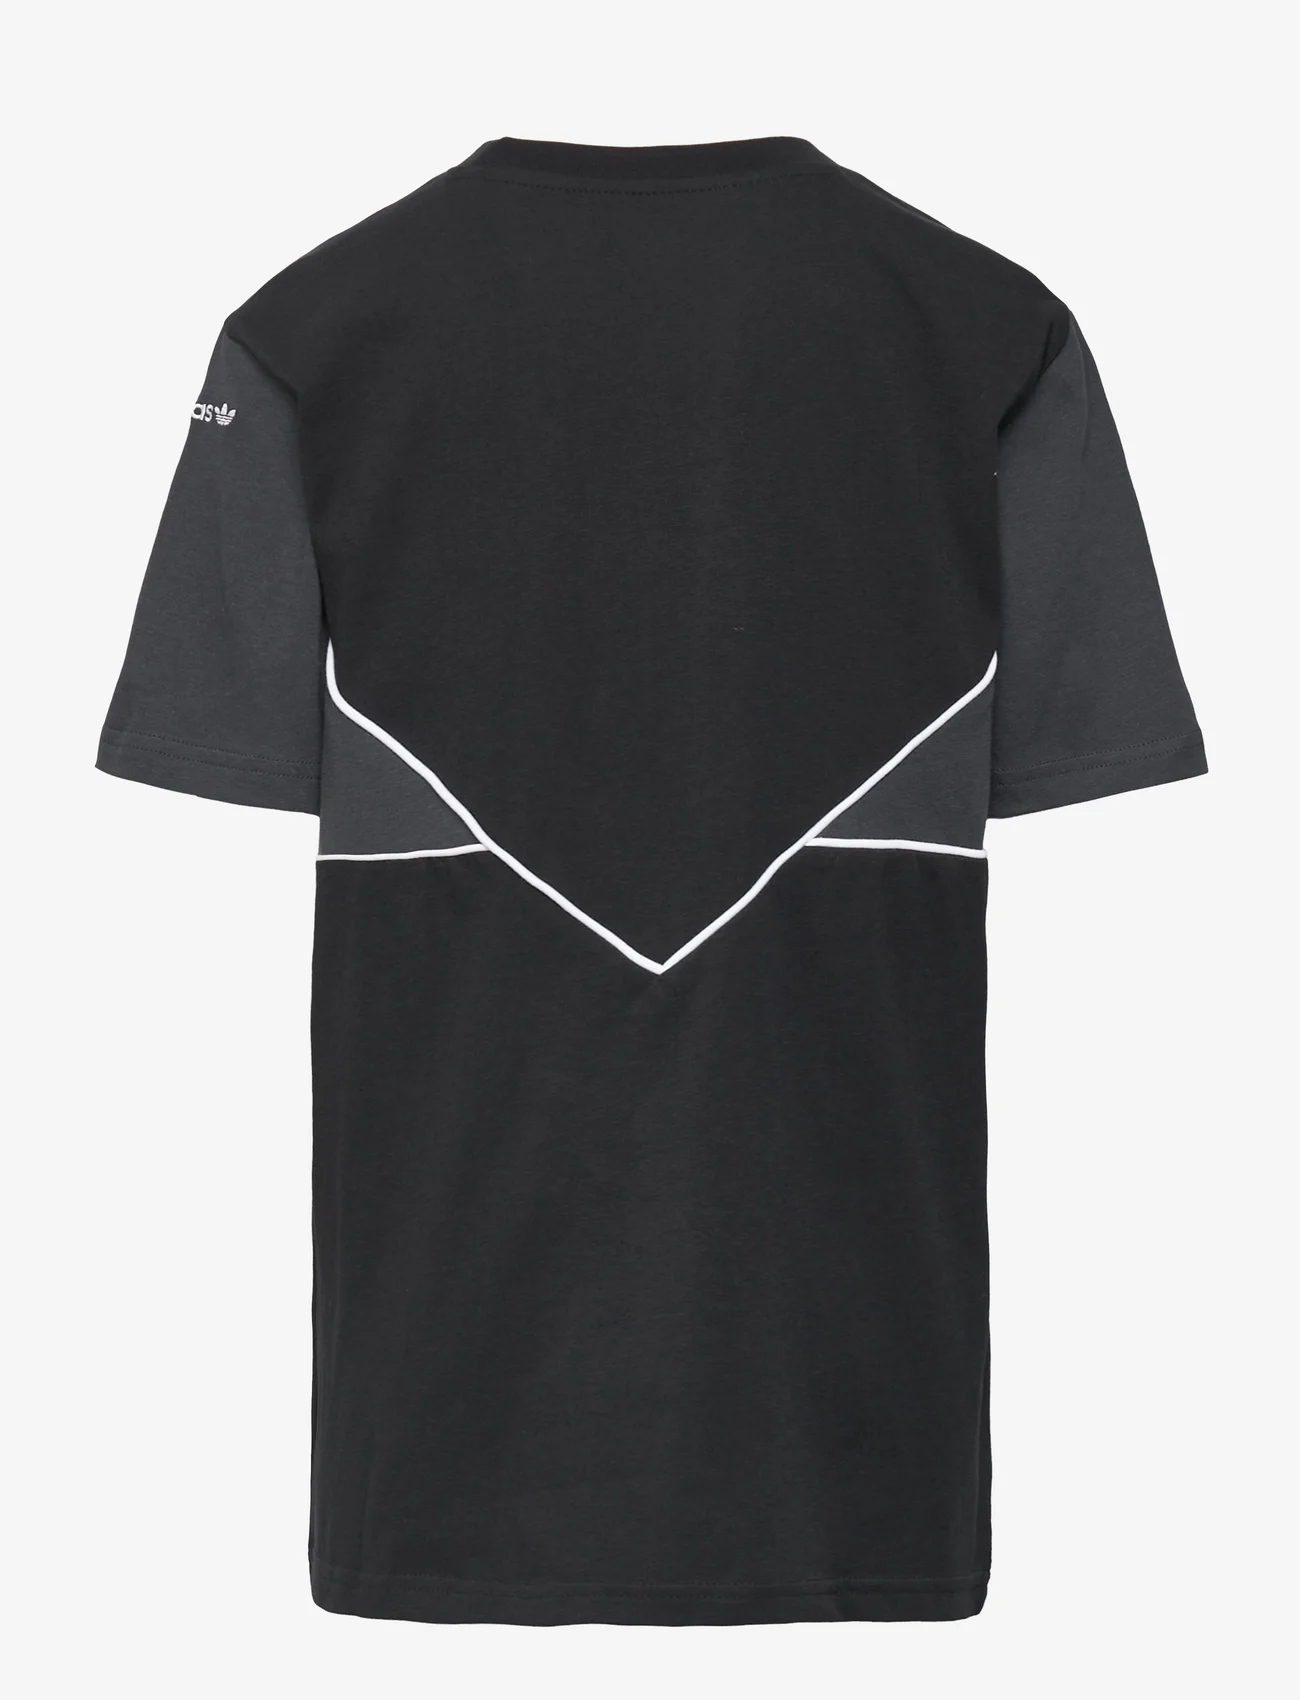 adidas Originals - Adicolor T-Shirt - short-sleeved t-shirts - black/carbon - 1